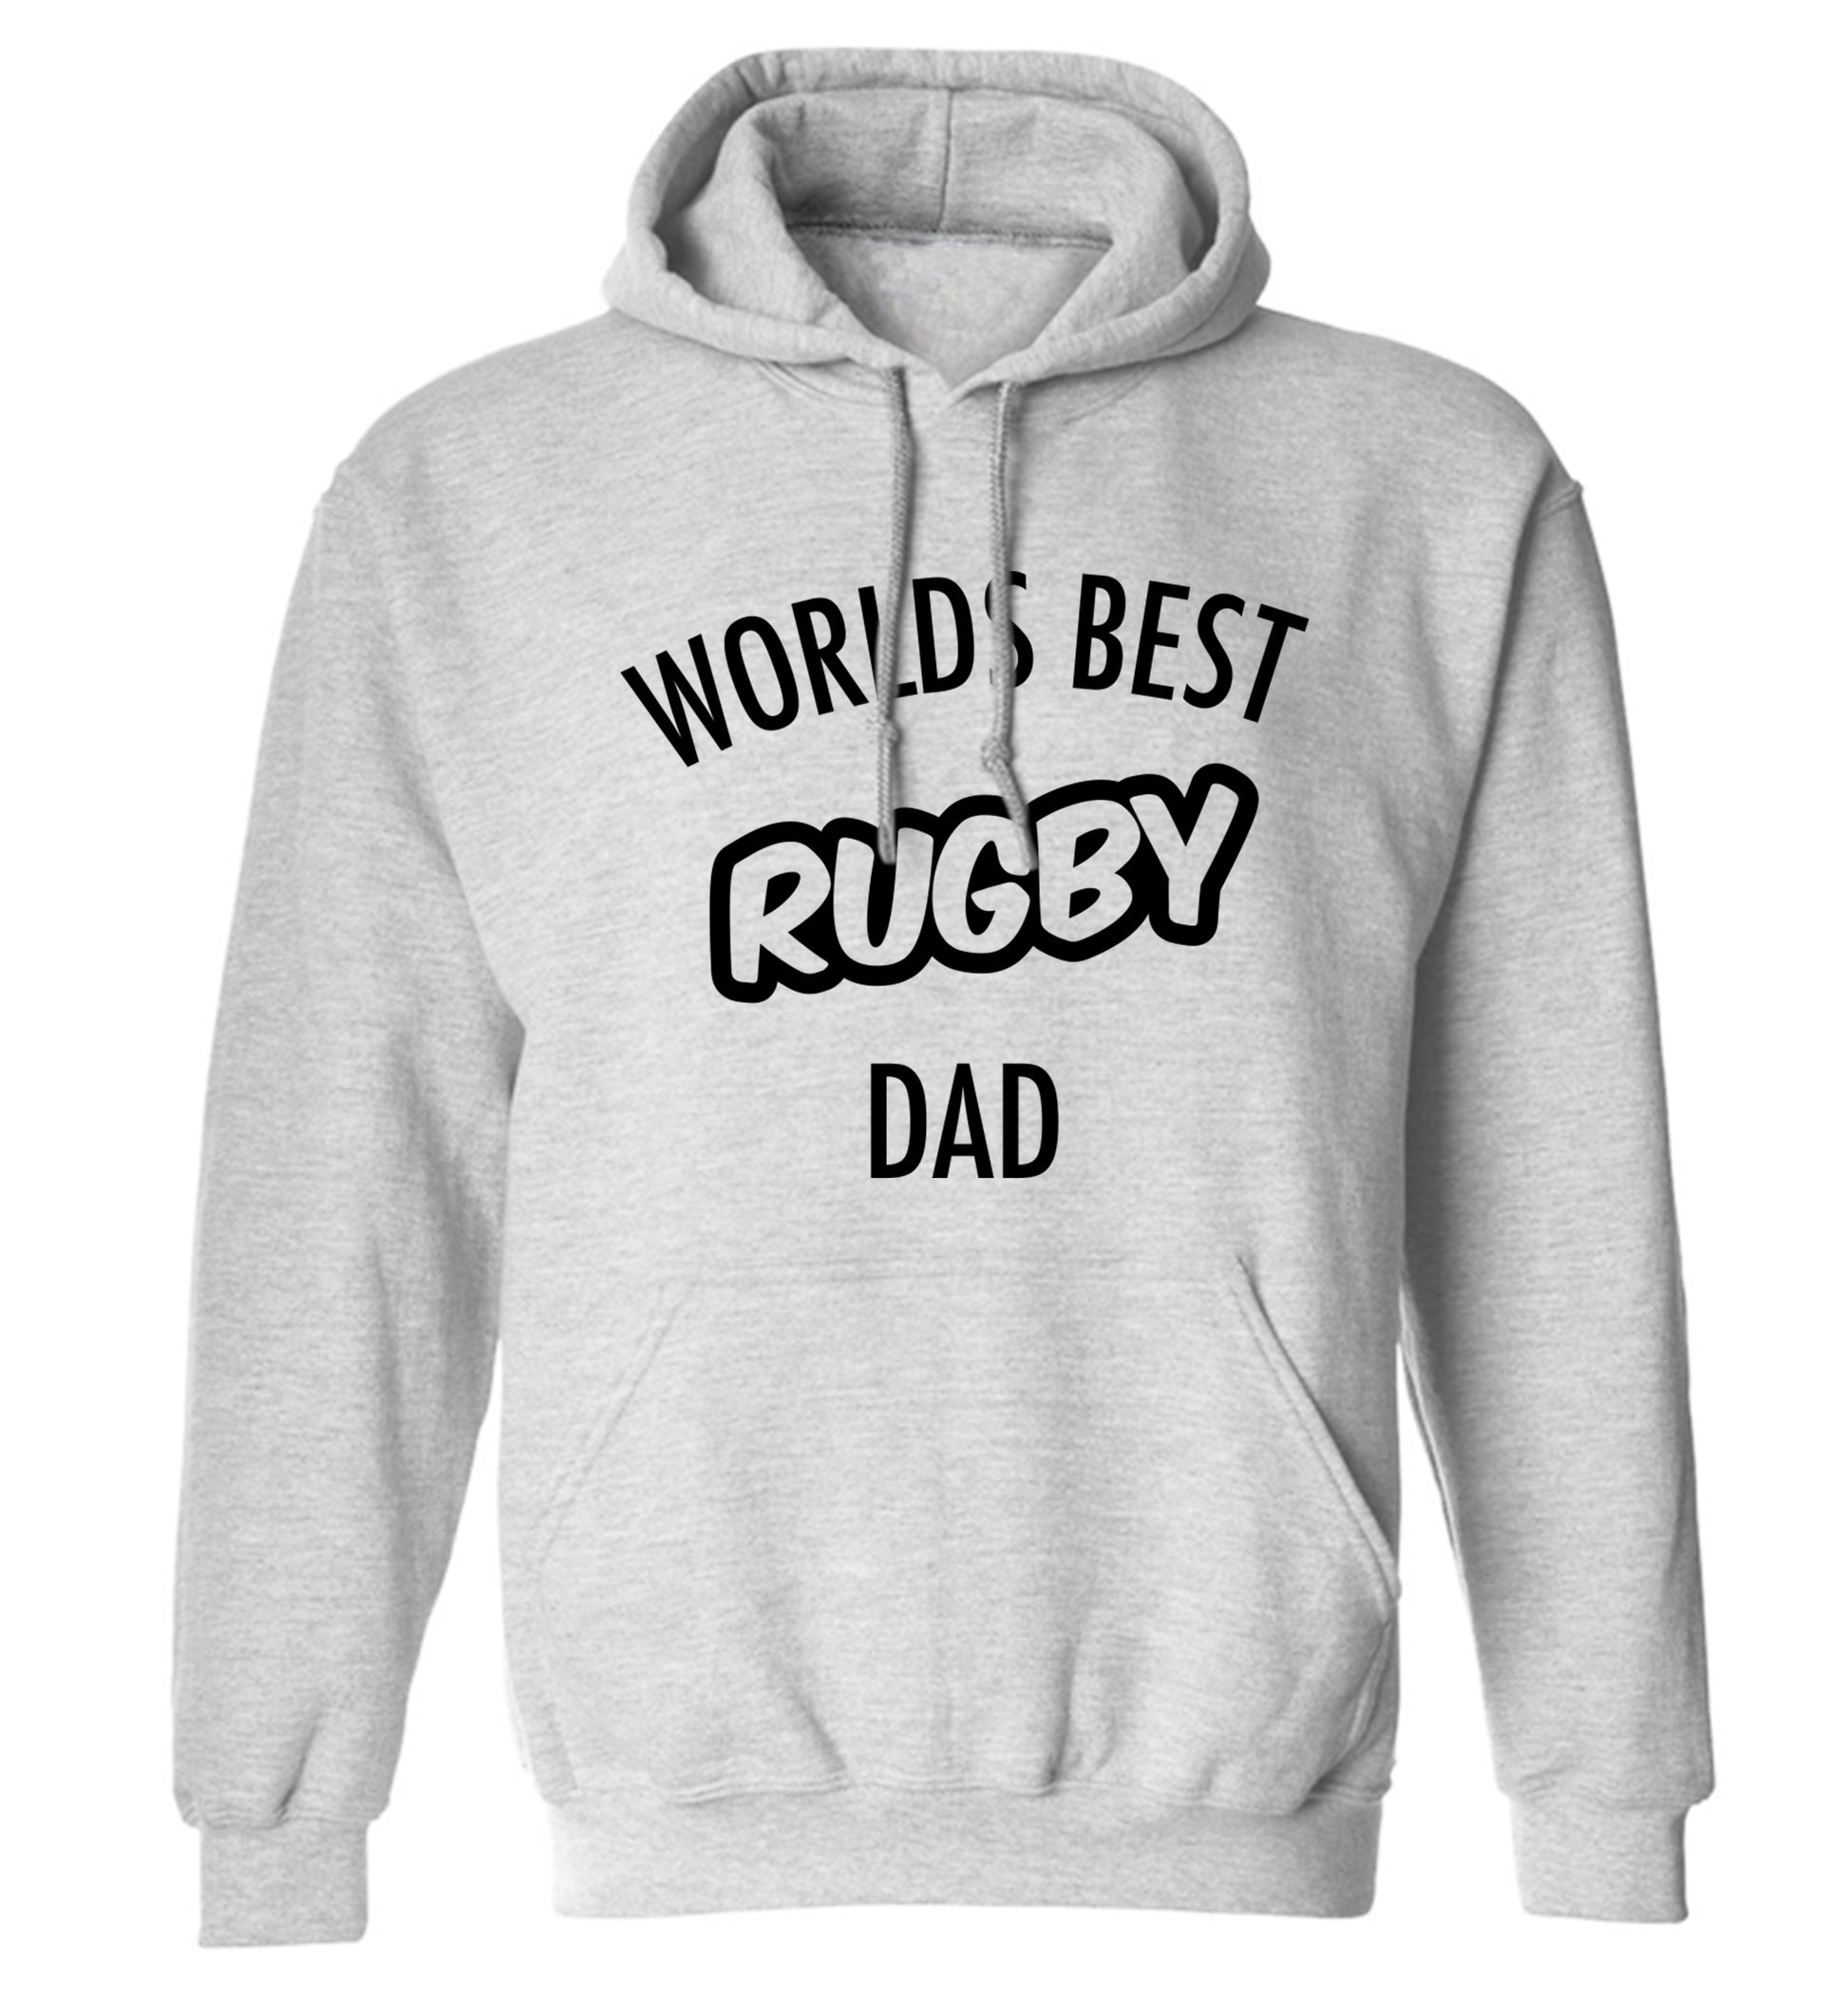 Worlds best rugby dad adults unisex grey hoodie 2XL